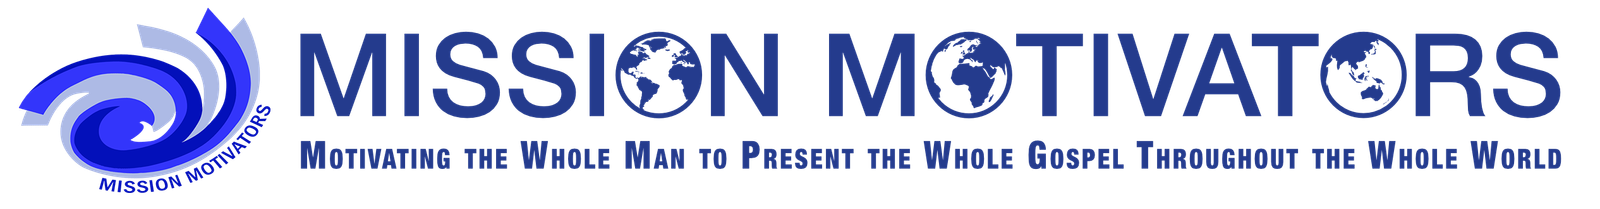 mission motivators logo